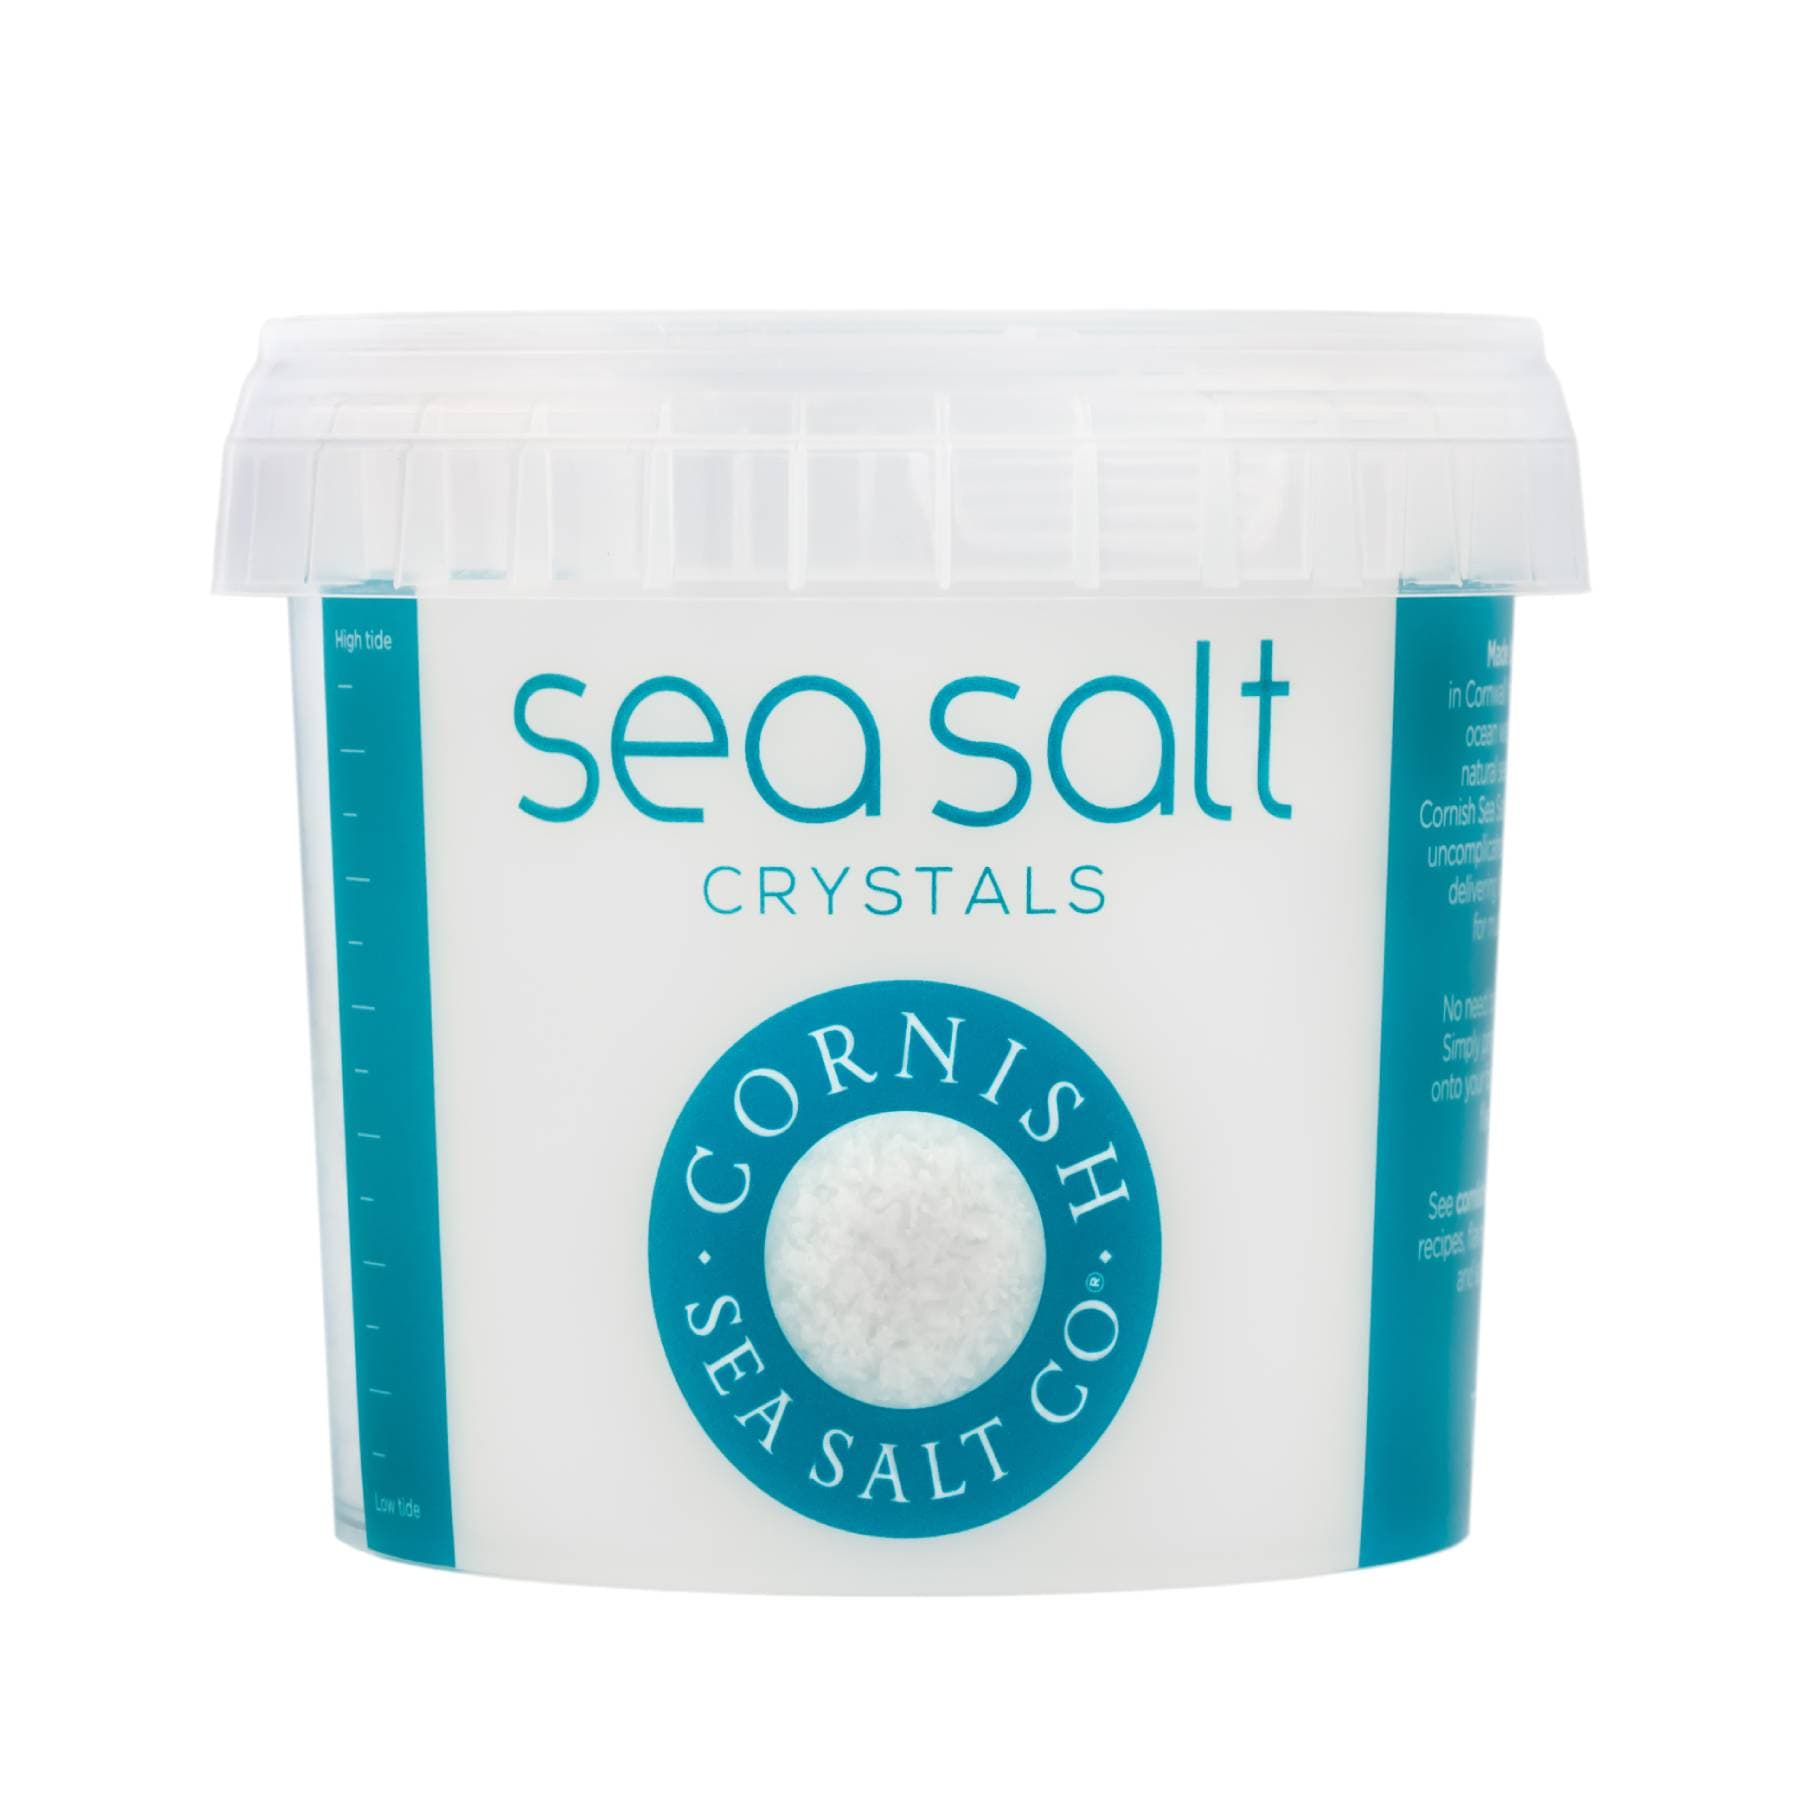 Original sea salt crystals 225g